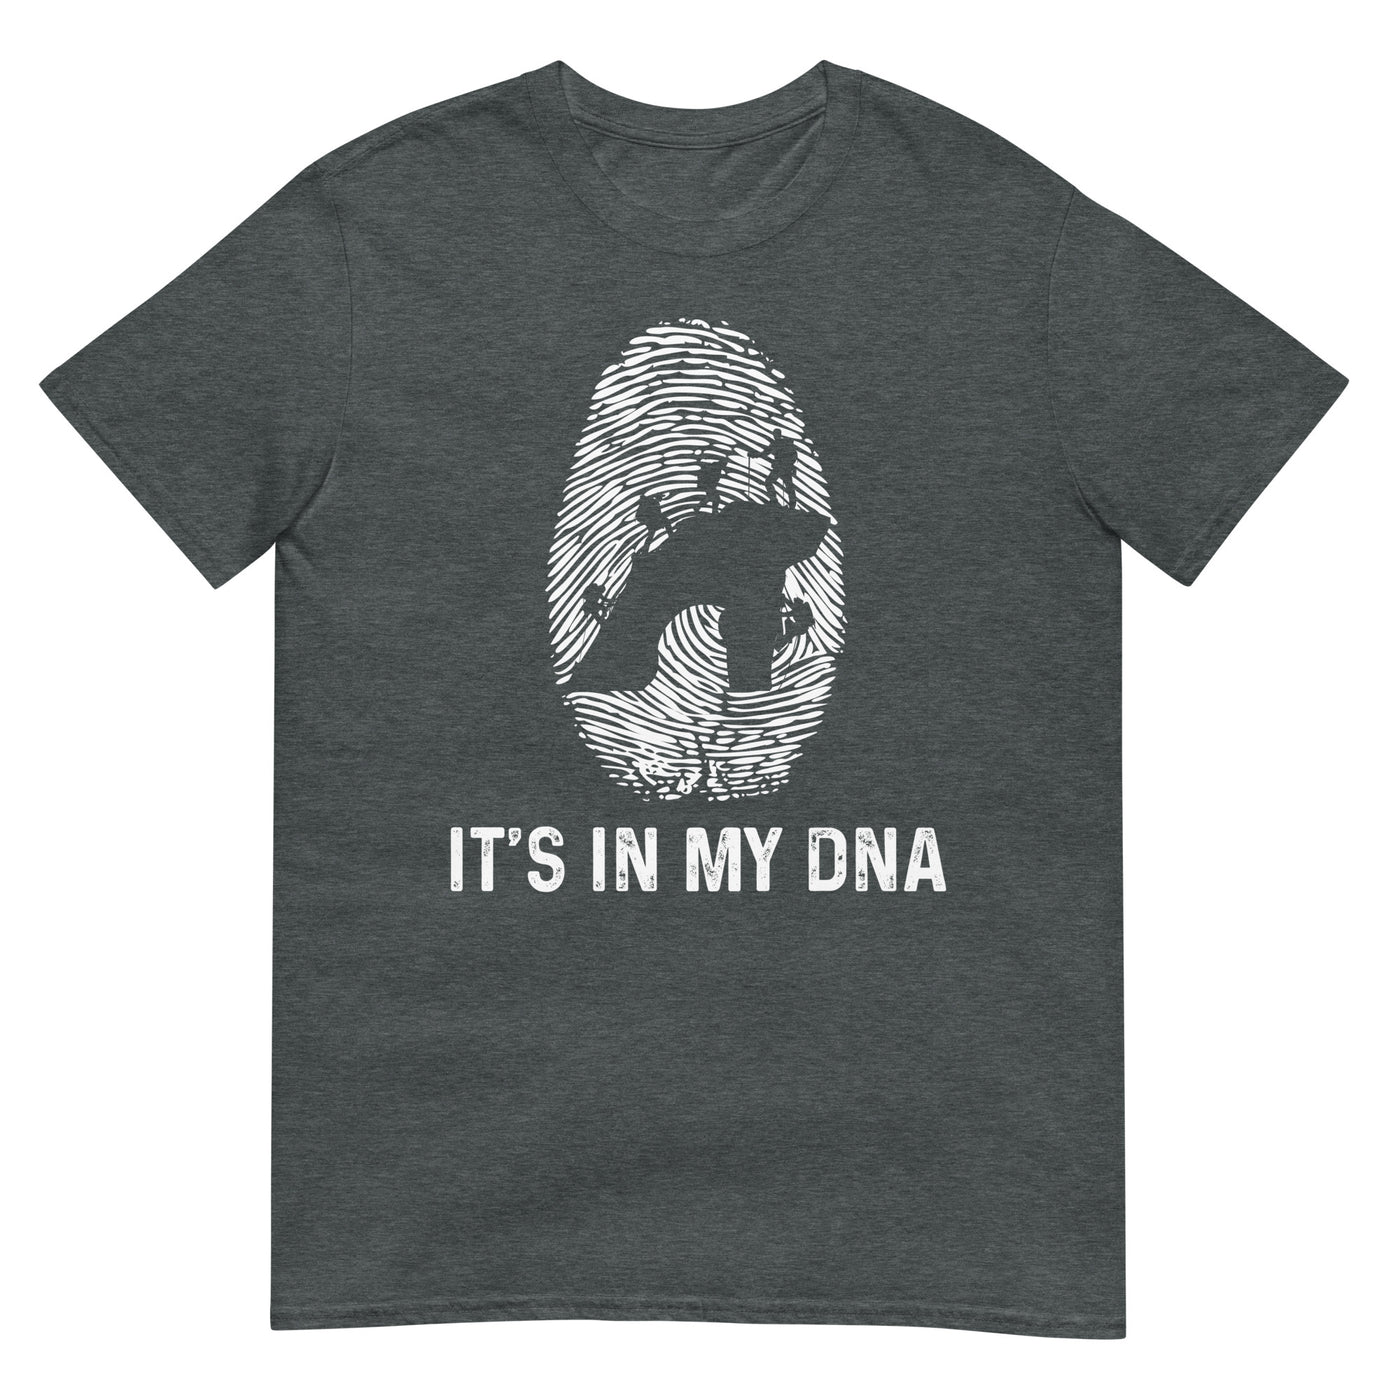 It's In My DNA - T-Shirt (Unisex) klettern xxx yyy zzz Dark Heather